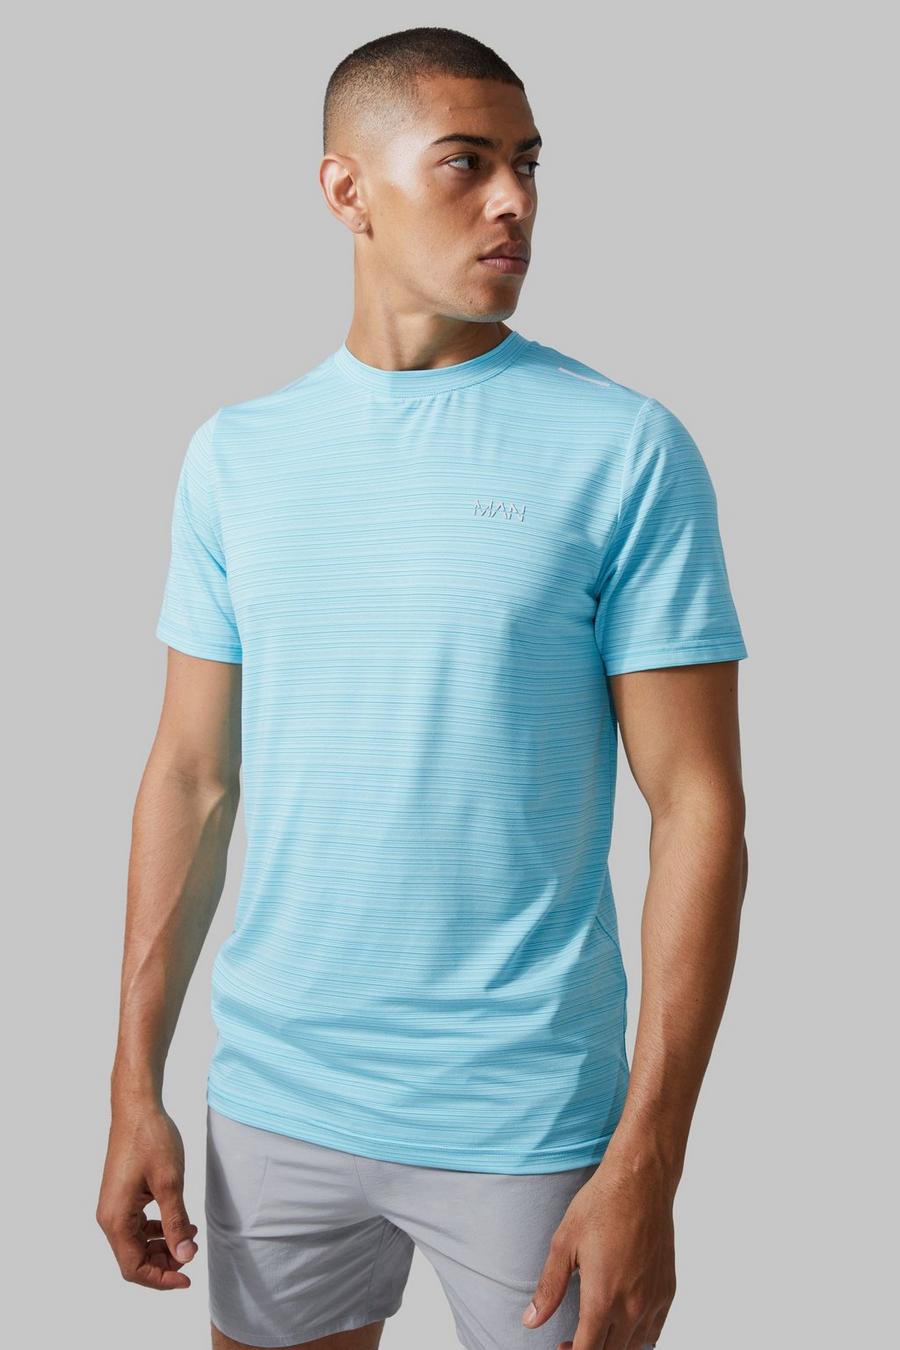 Man Active Lightweight Performance T-Shirt, Light blue image number 1